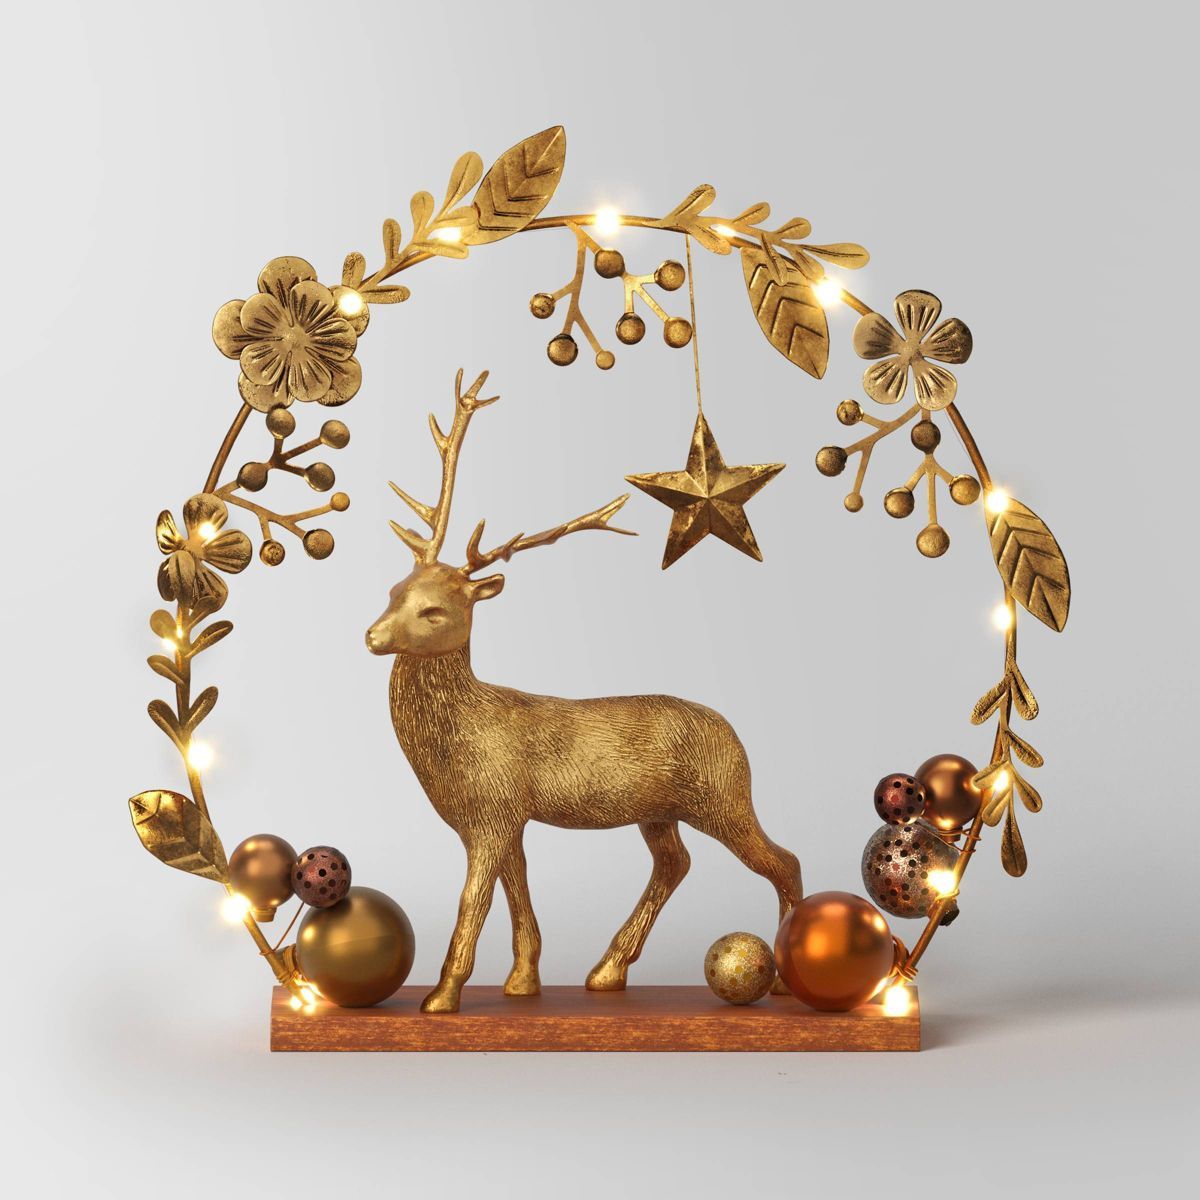 15" Battery Operated Lit Deer and Foliage Christmas Decorative Sculpture - Wondershop™ Gold | Target